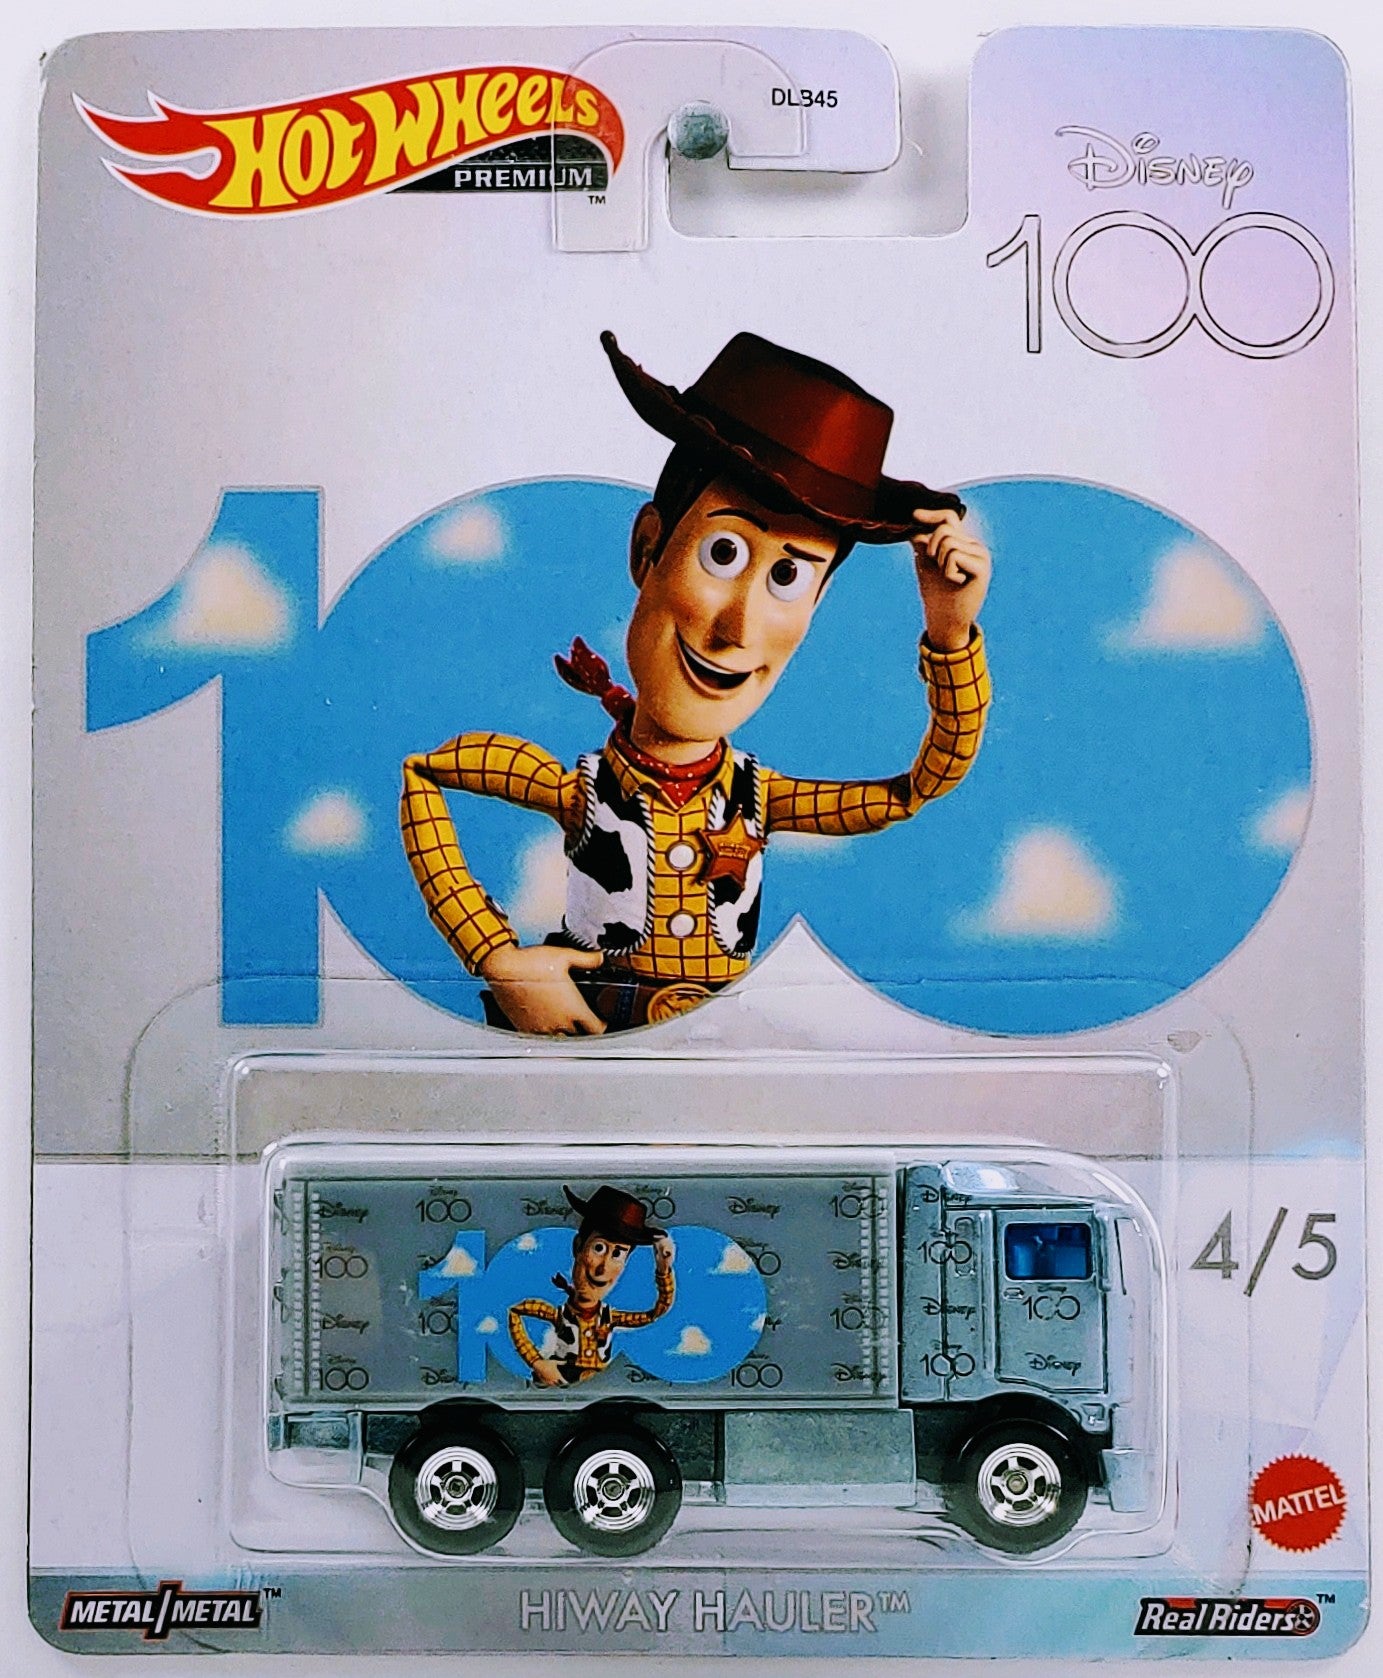 Hot Wheels 2023 - Premium / Disney 100 4/5 - HiWay Hauler - Light Metallic Blue / Woody from 'Toy Story' - Metal/Metal & Real Riders